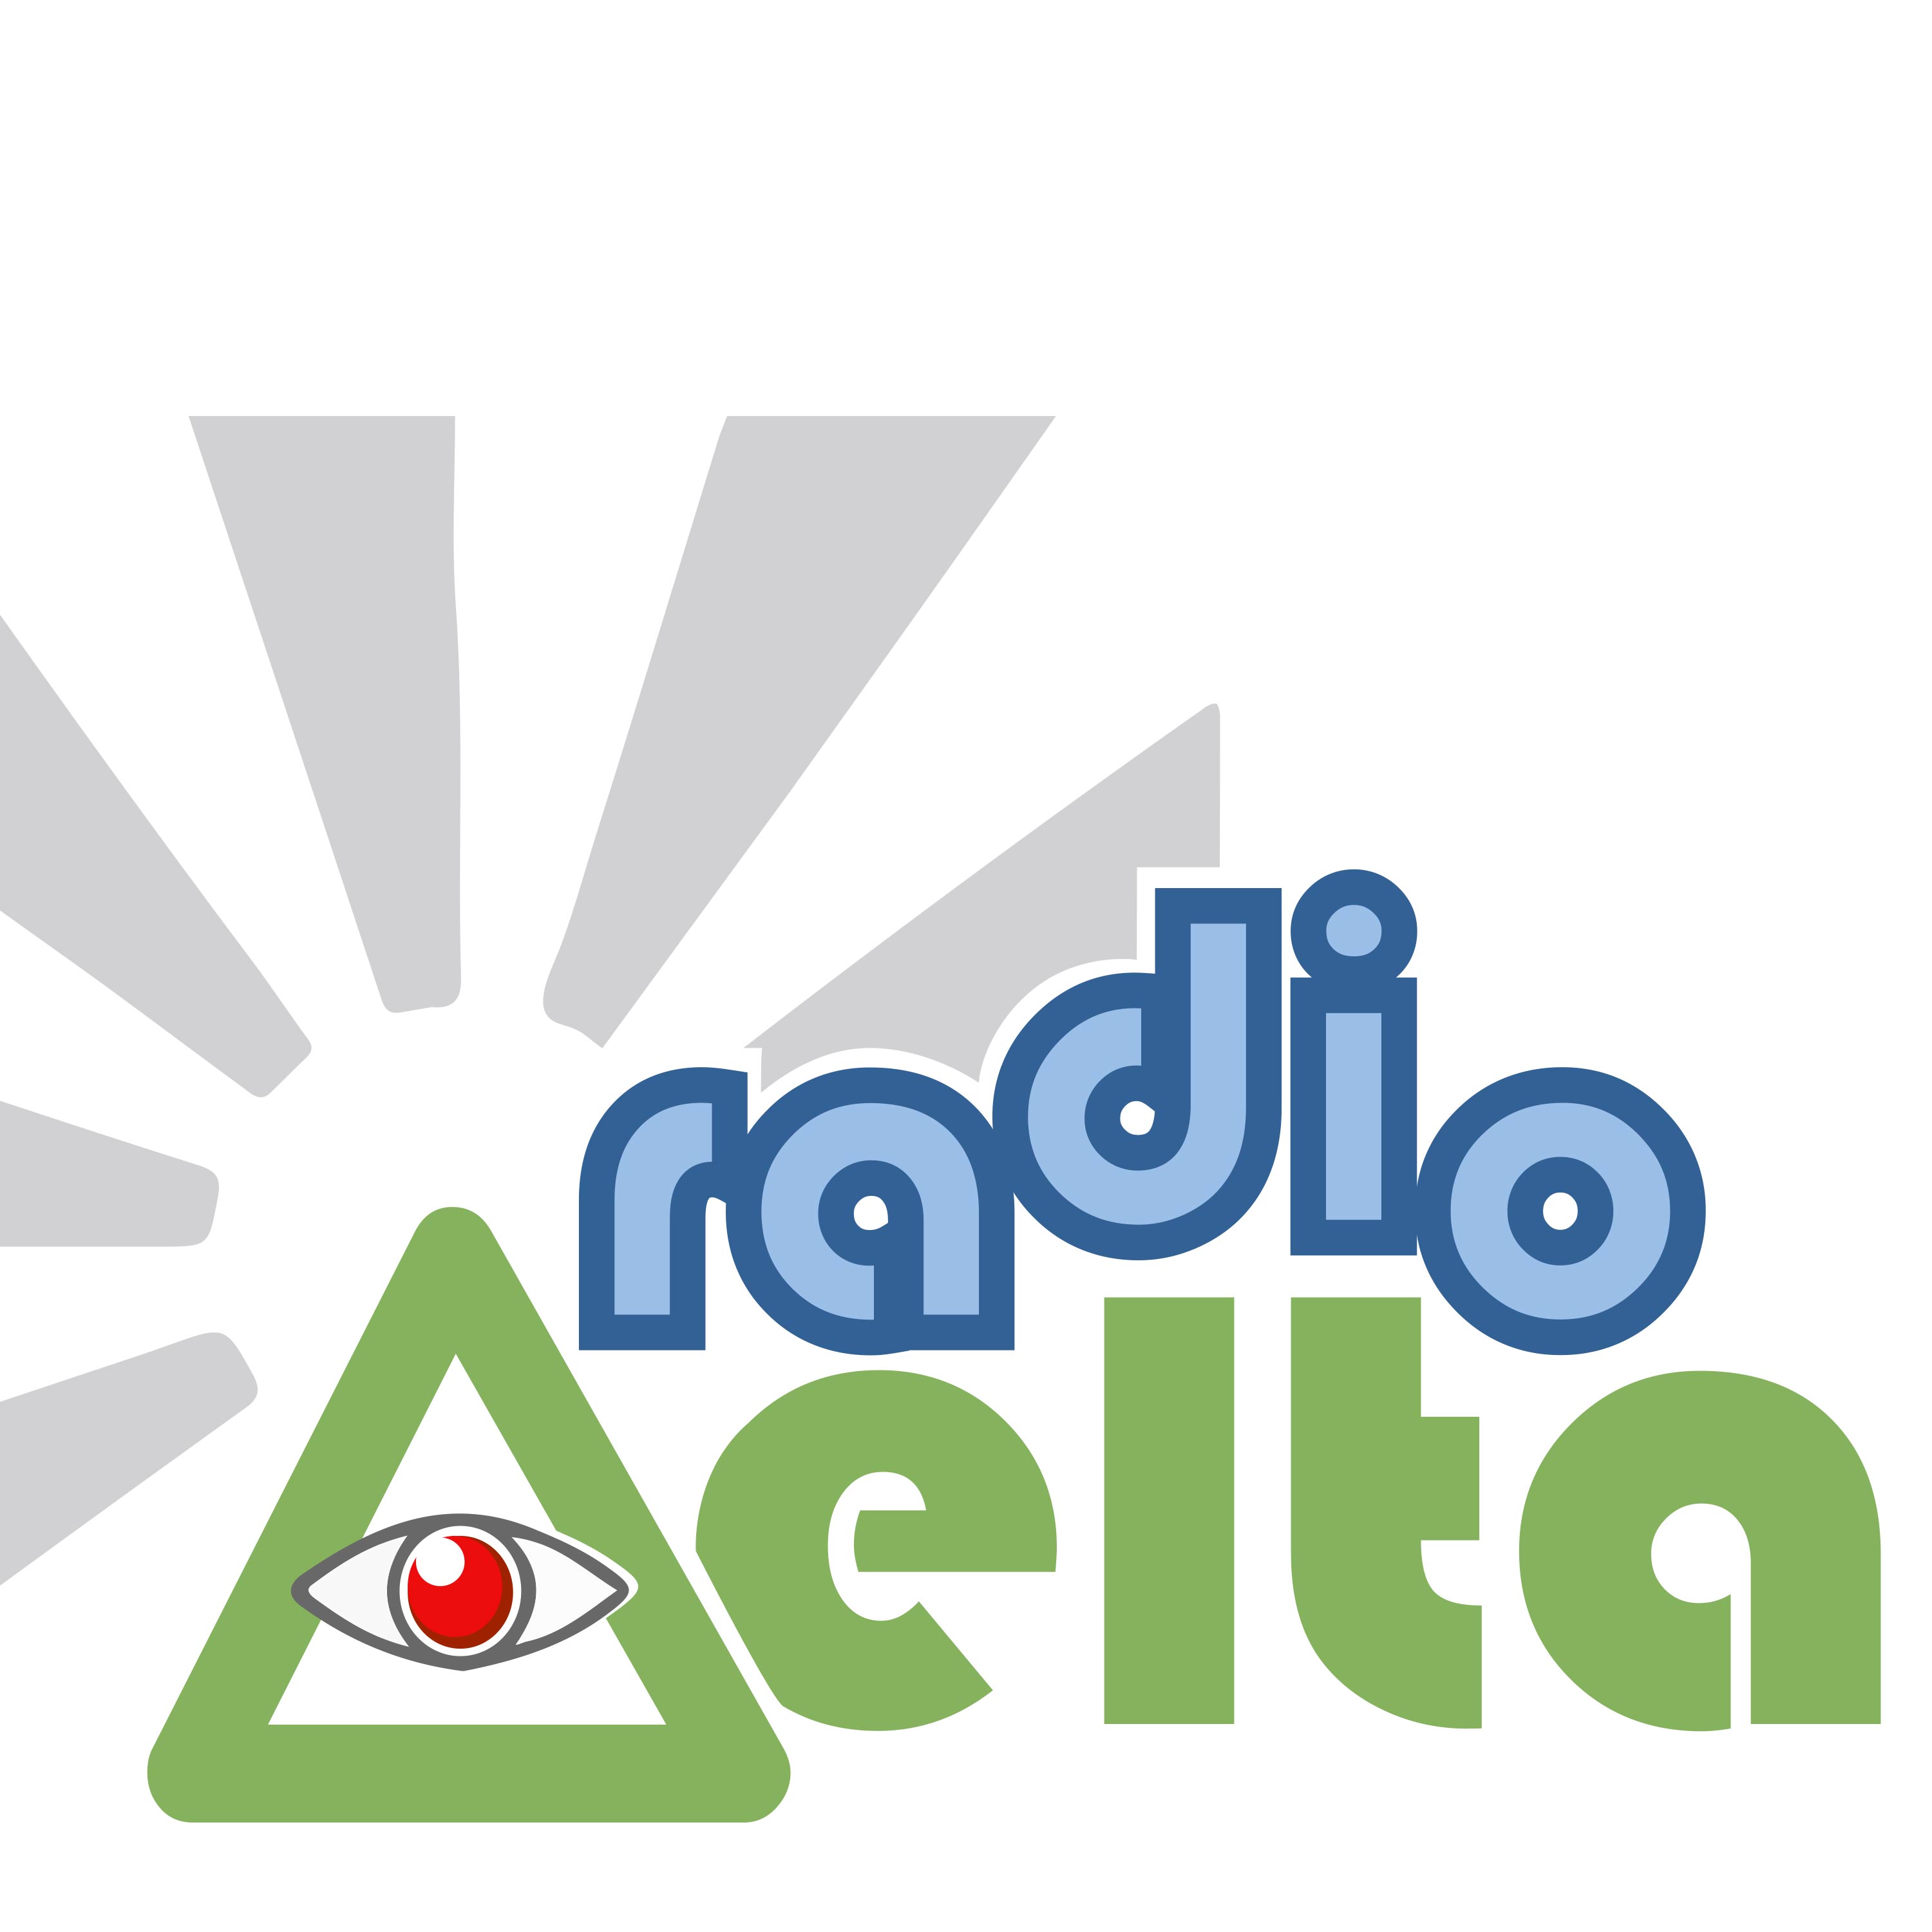 RadioDelta